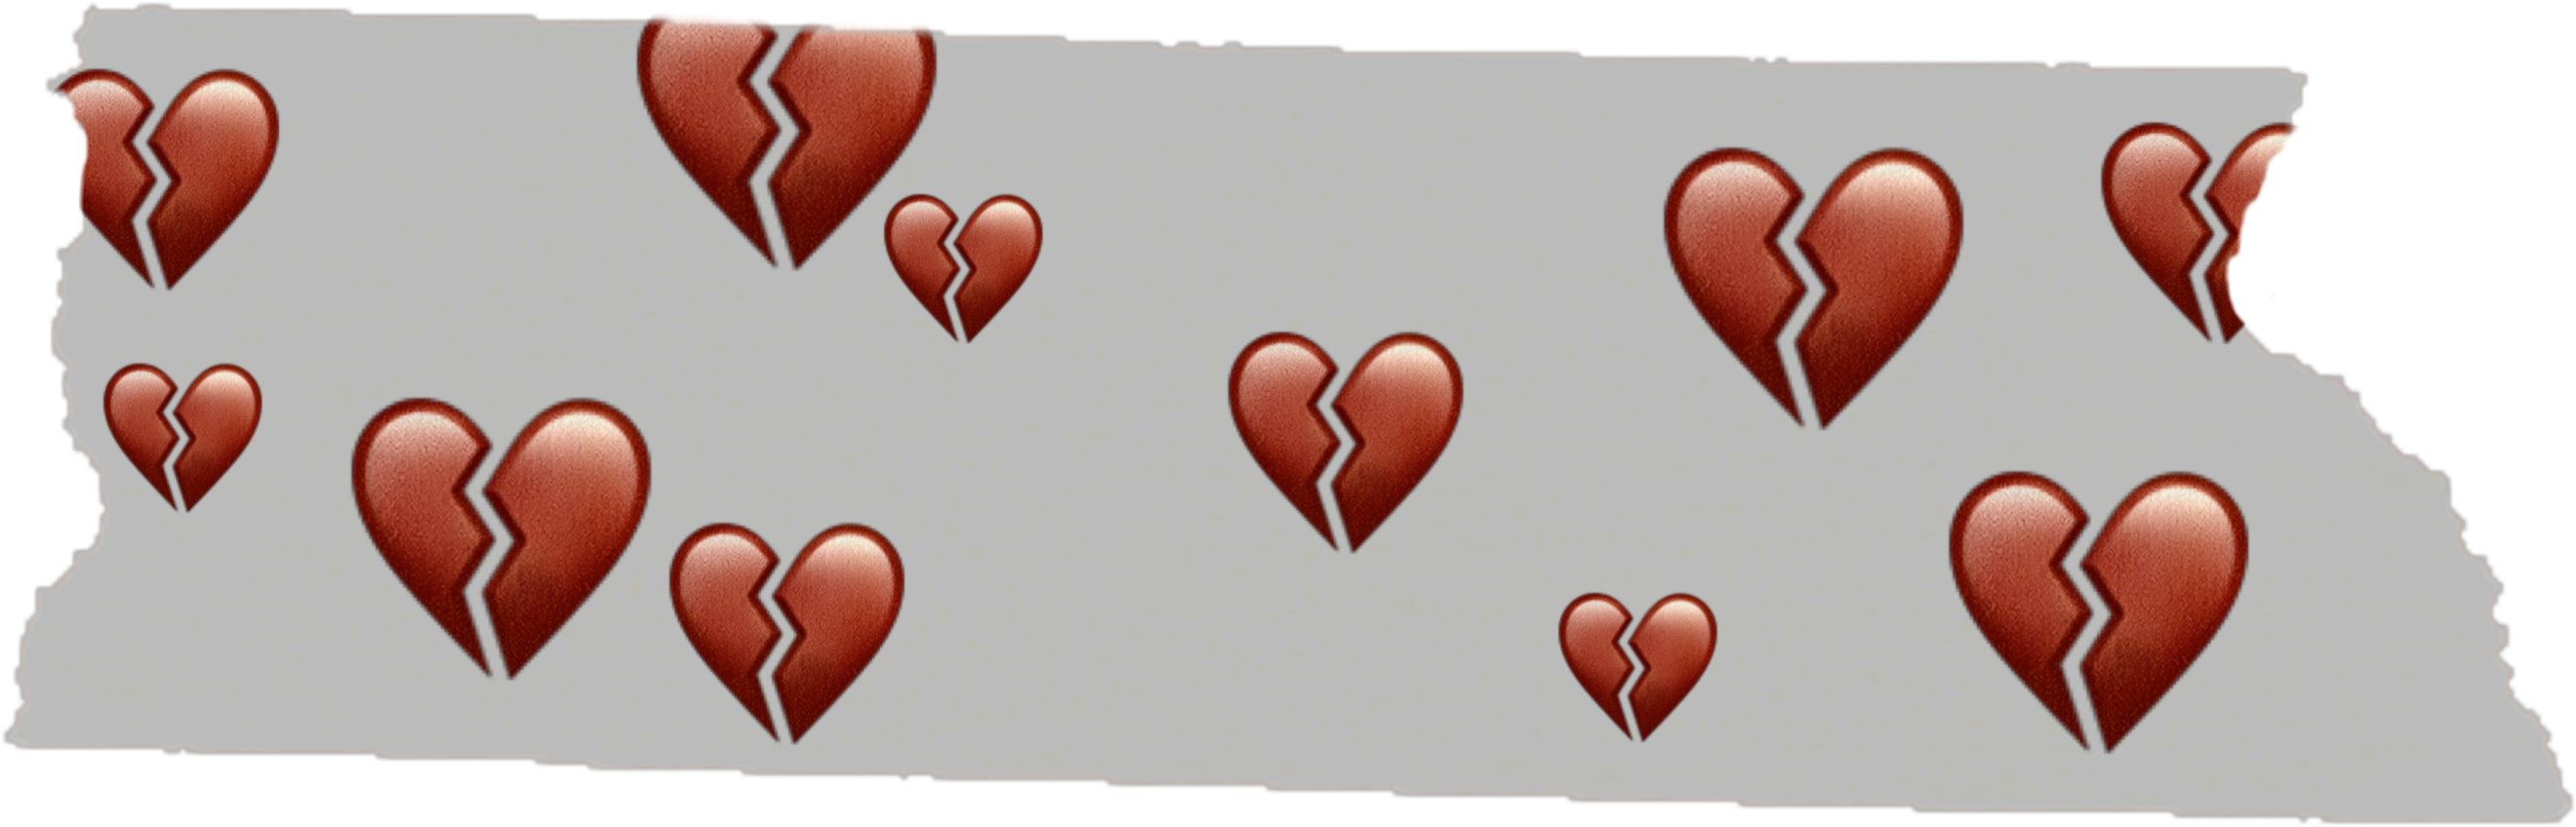 Broken Hearts Taped Together PNG image